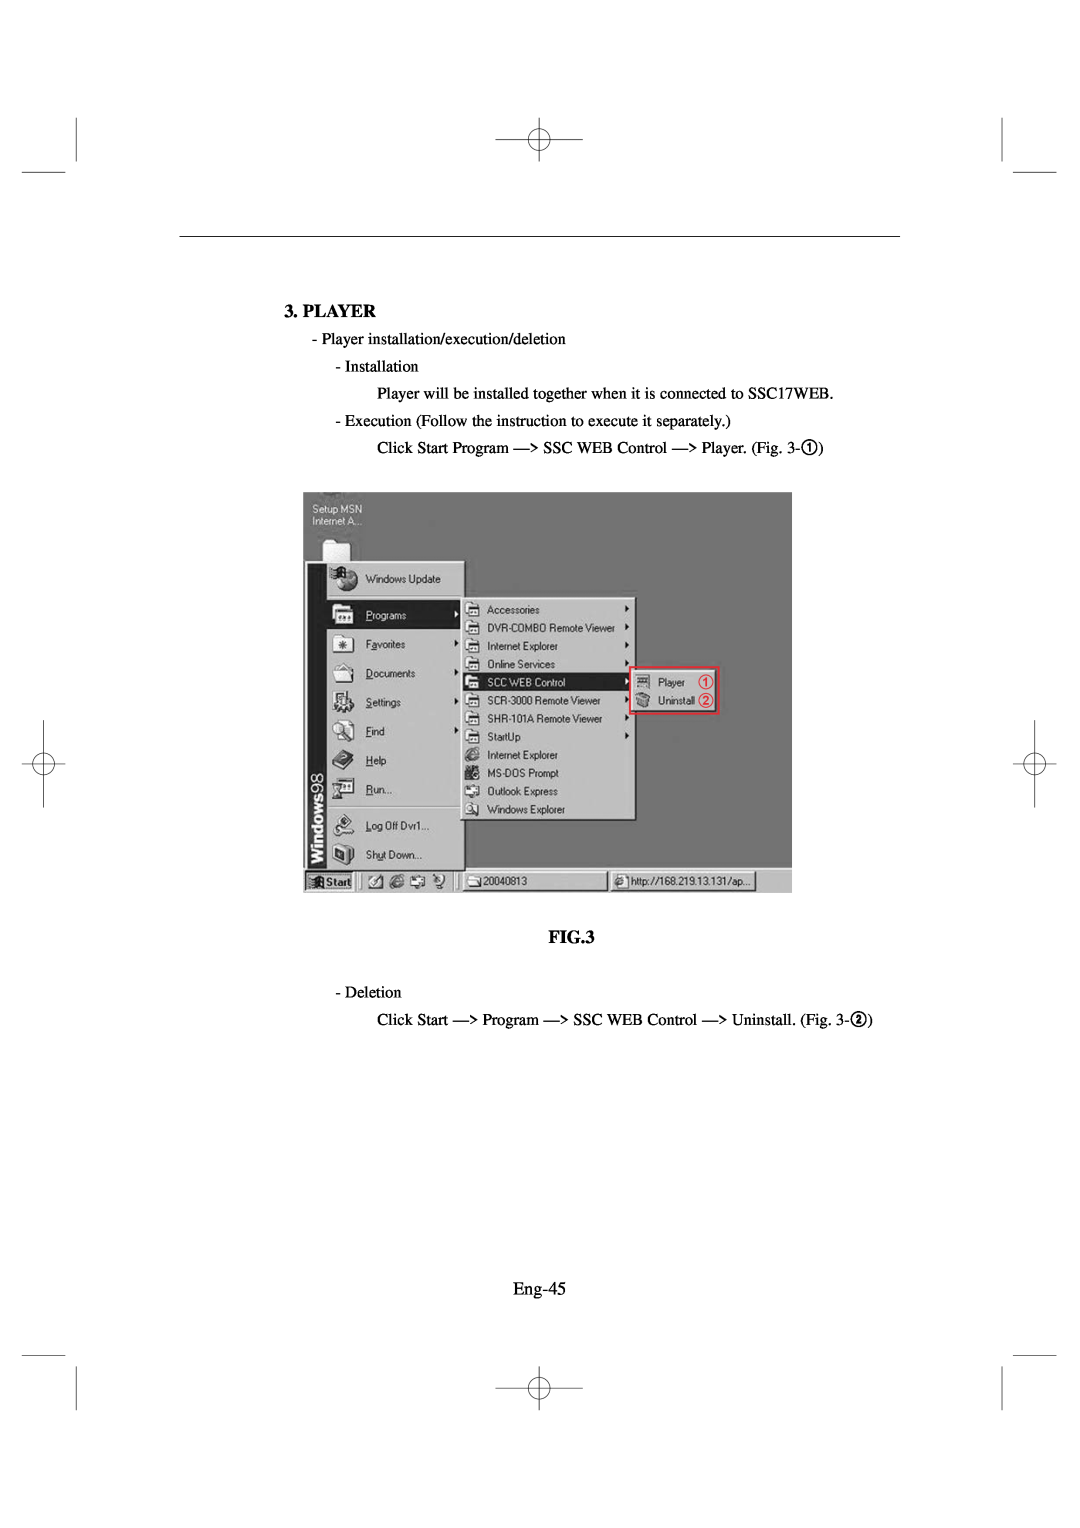 Samsung SSC17WEB manual Player, Eng-45 